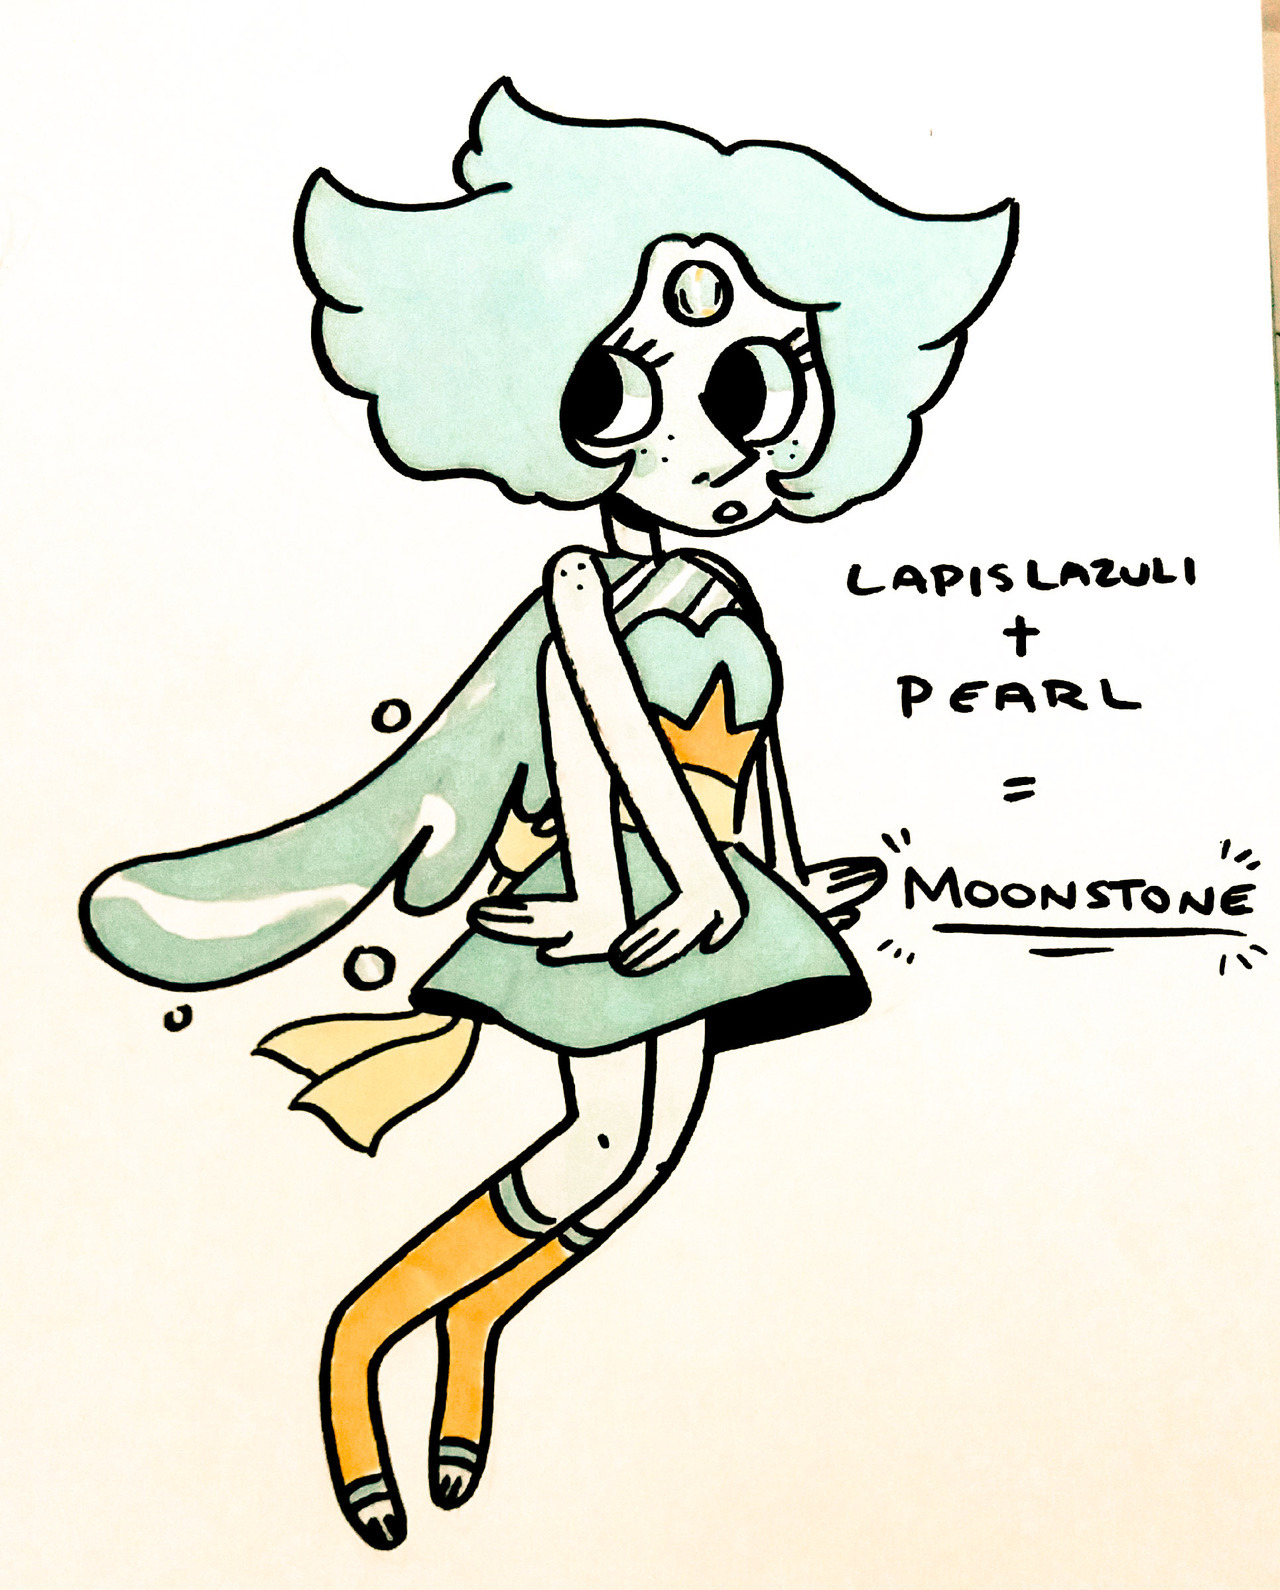 Lapis and Pearl make Moonstone!